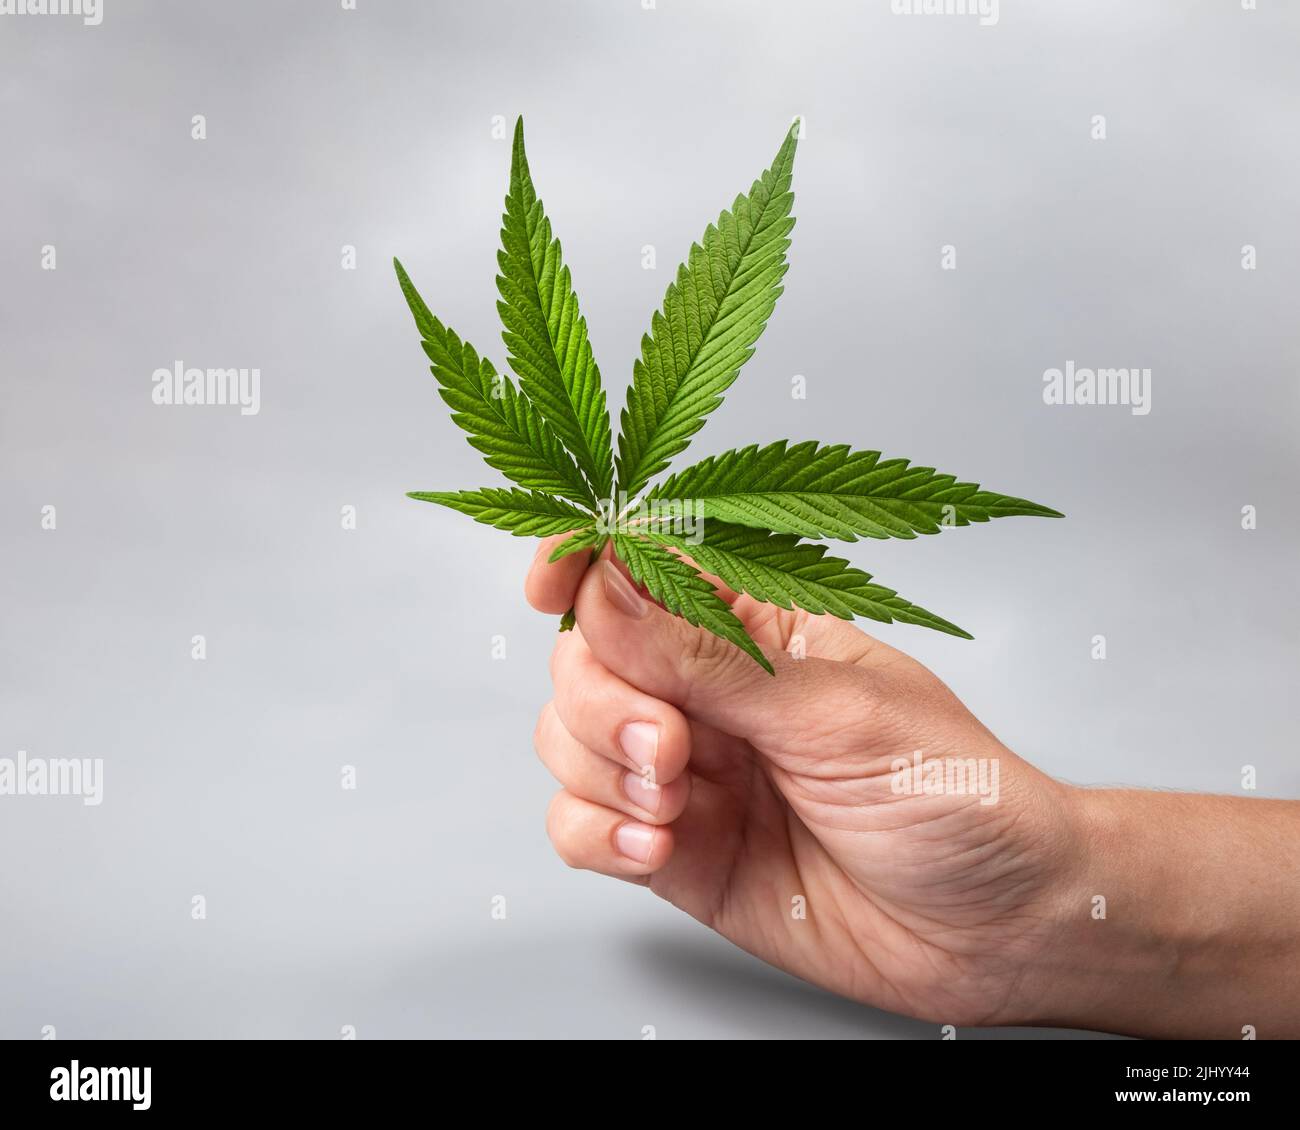 green cannabis leaf in hand on gray background, marijuana legalization. Stock Photo